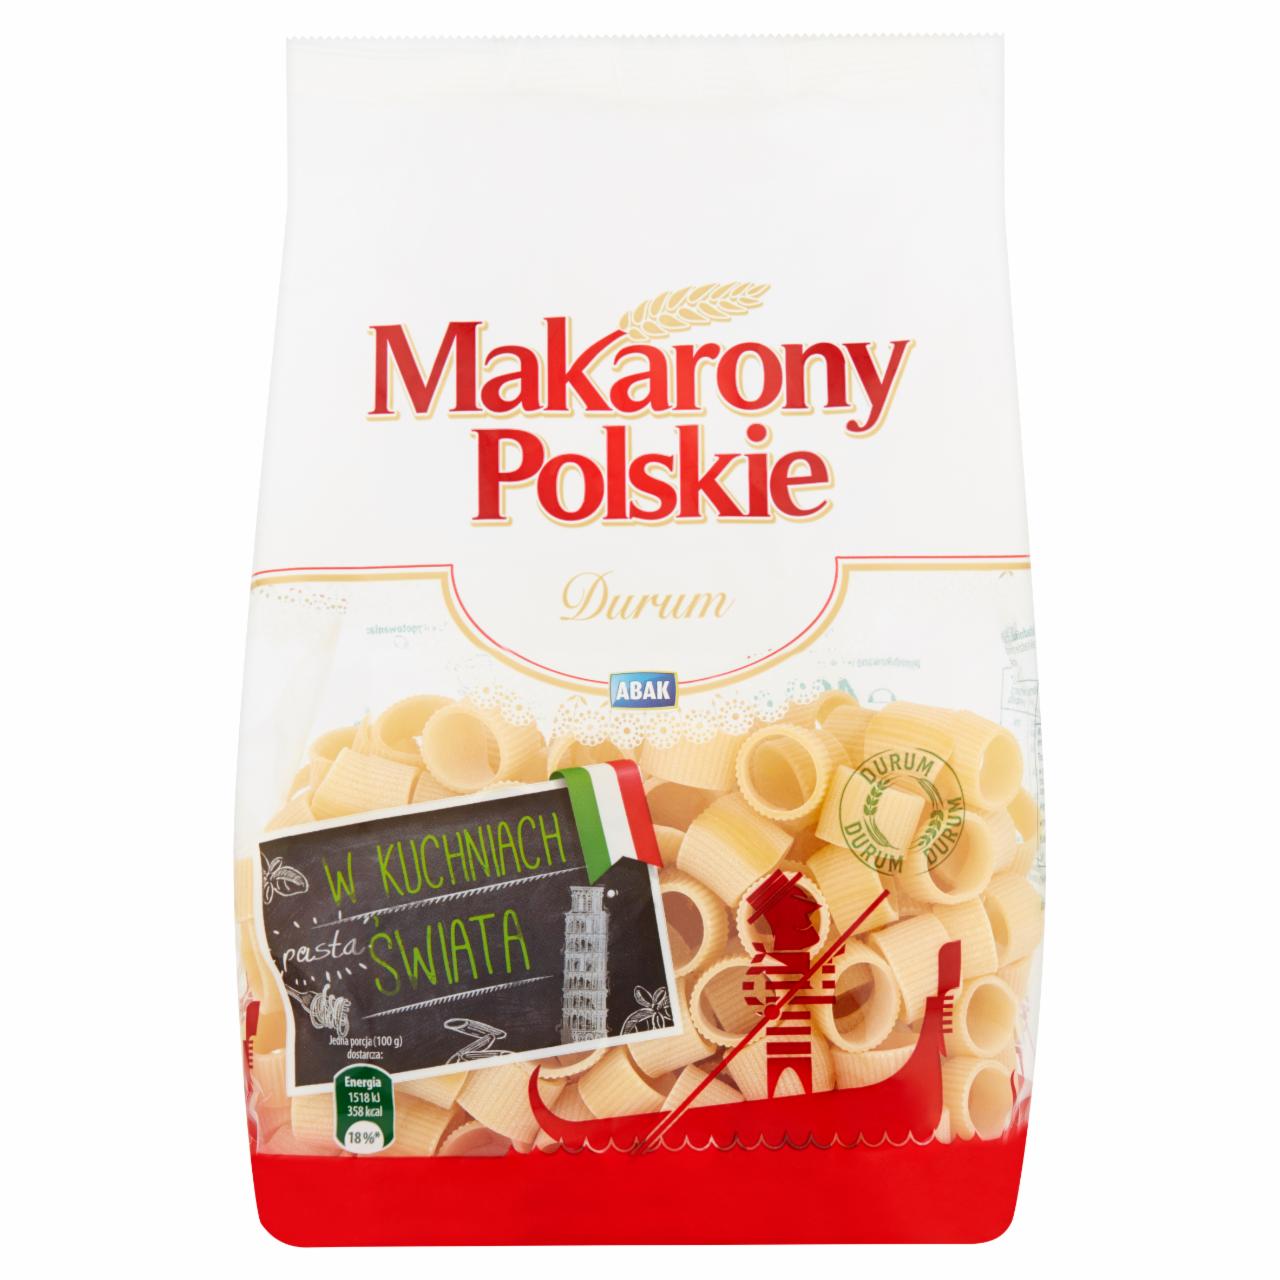 Zdjęcia - Makarony Polskie Makaron durum calamari 400 g